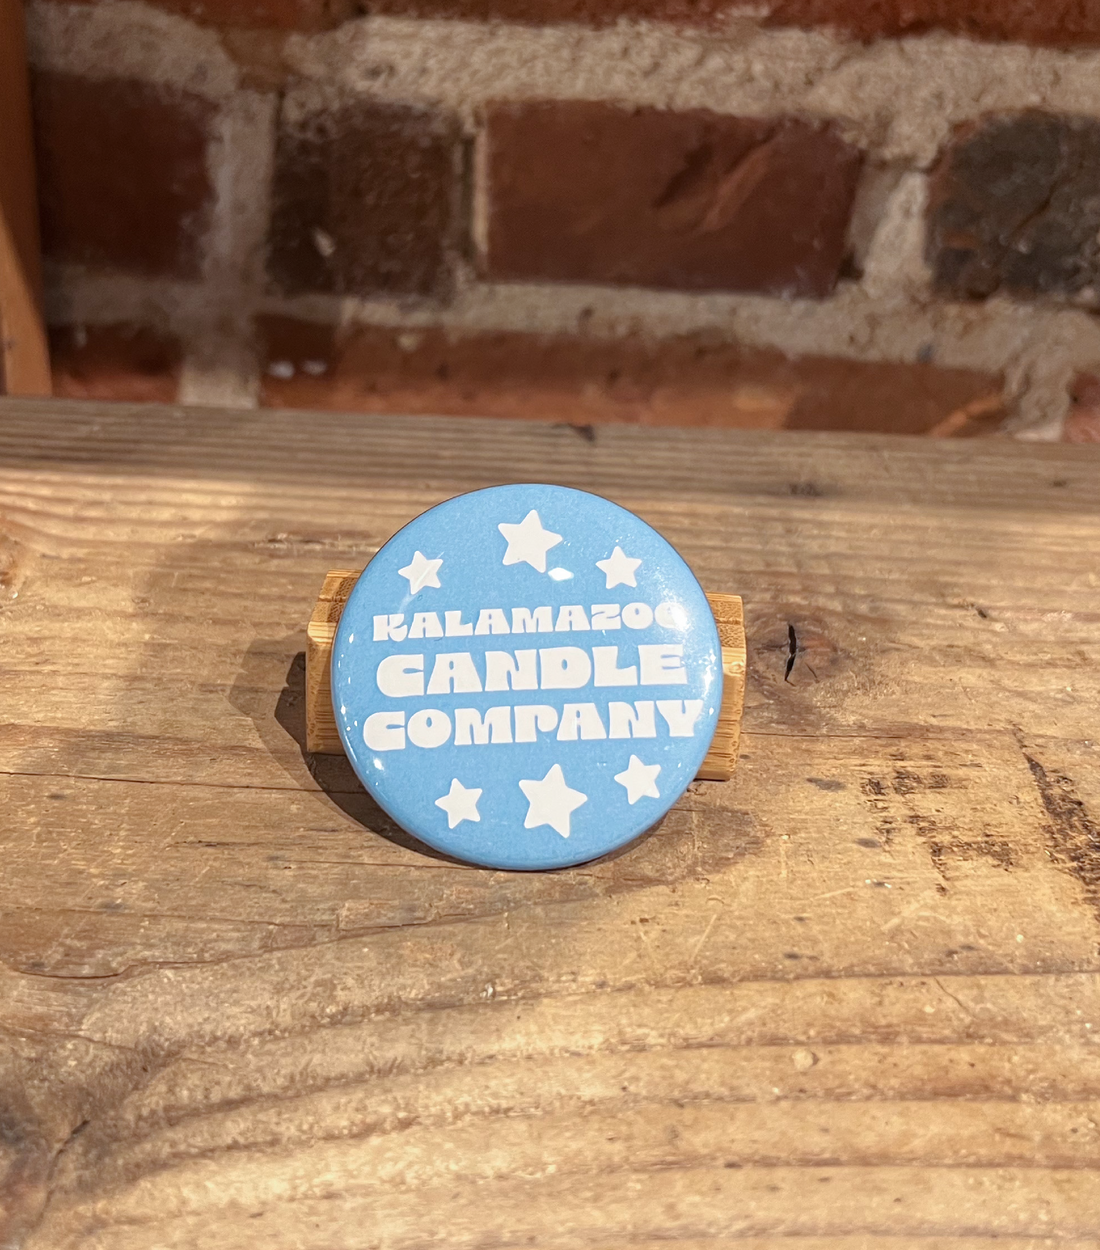 A blue button that says Kalamazoo Candle Company